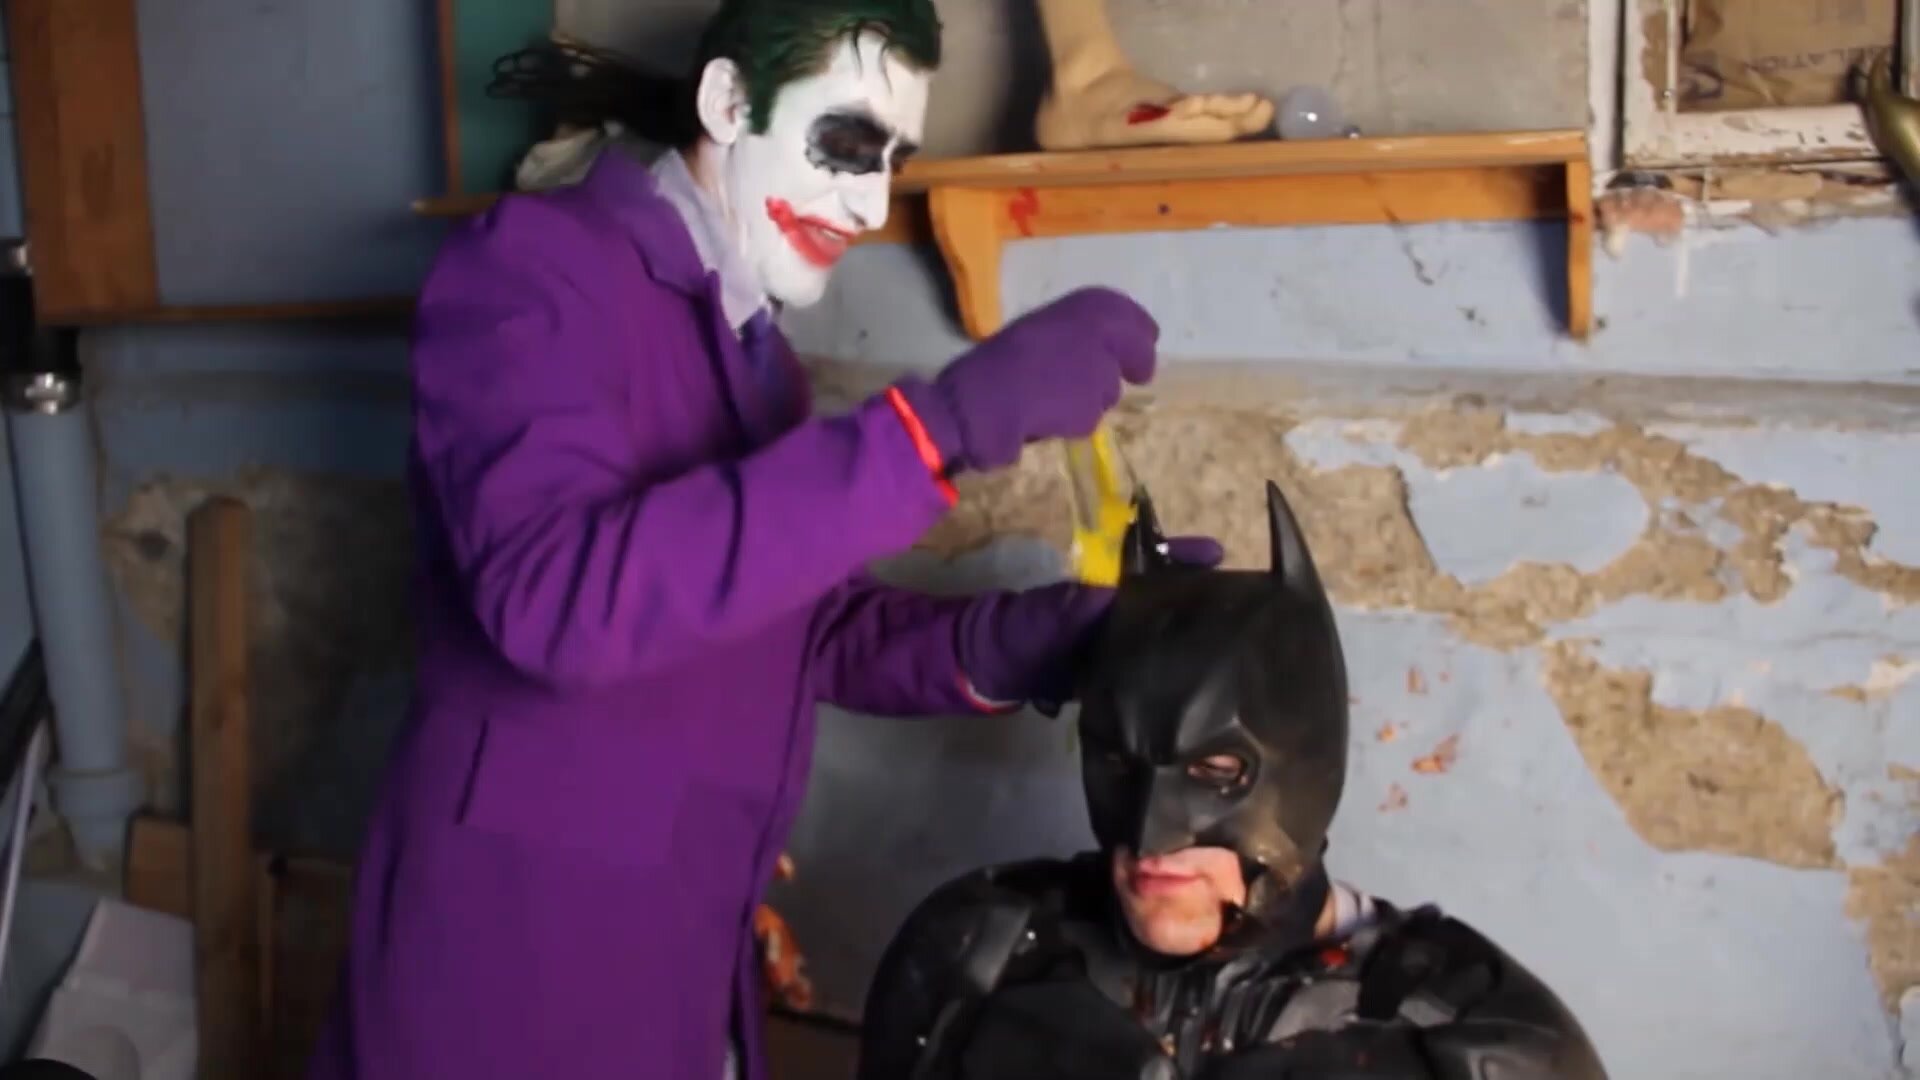 Batman gunged by Joker - ThisVid.com